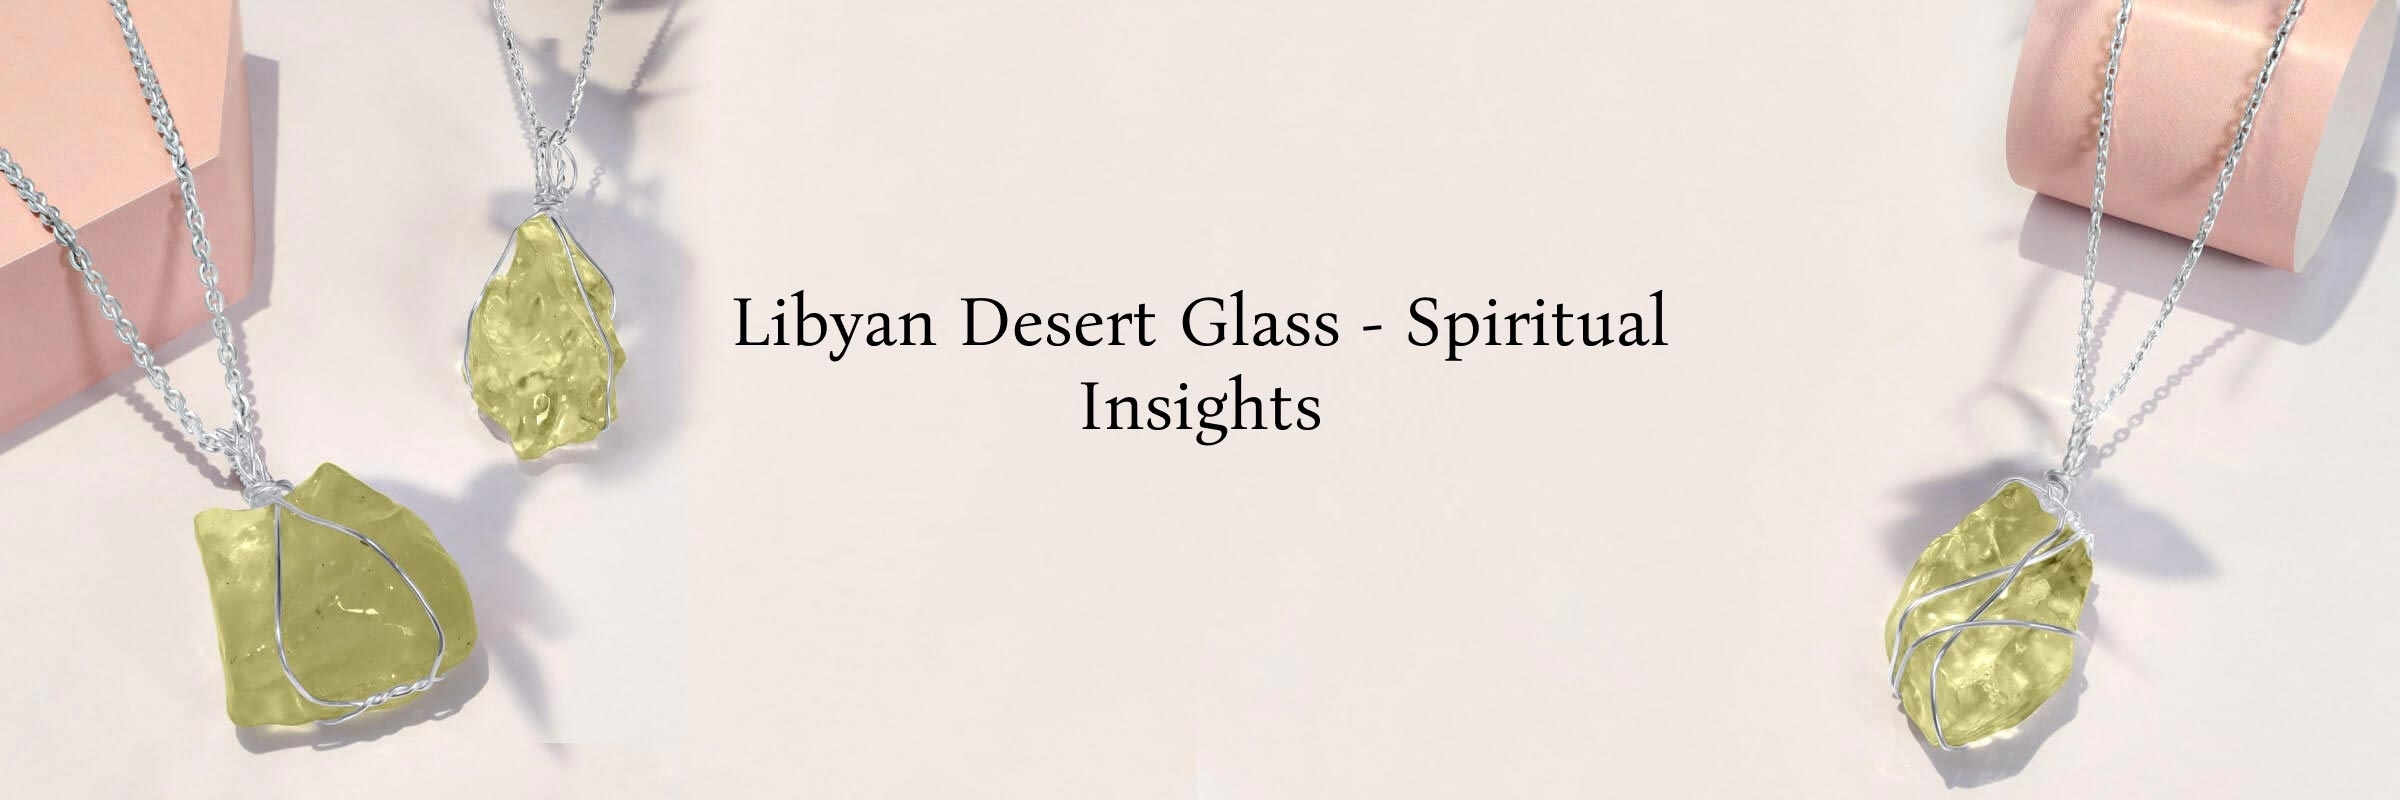 Libyan Desert Glass Metaphysical Properties